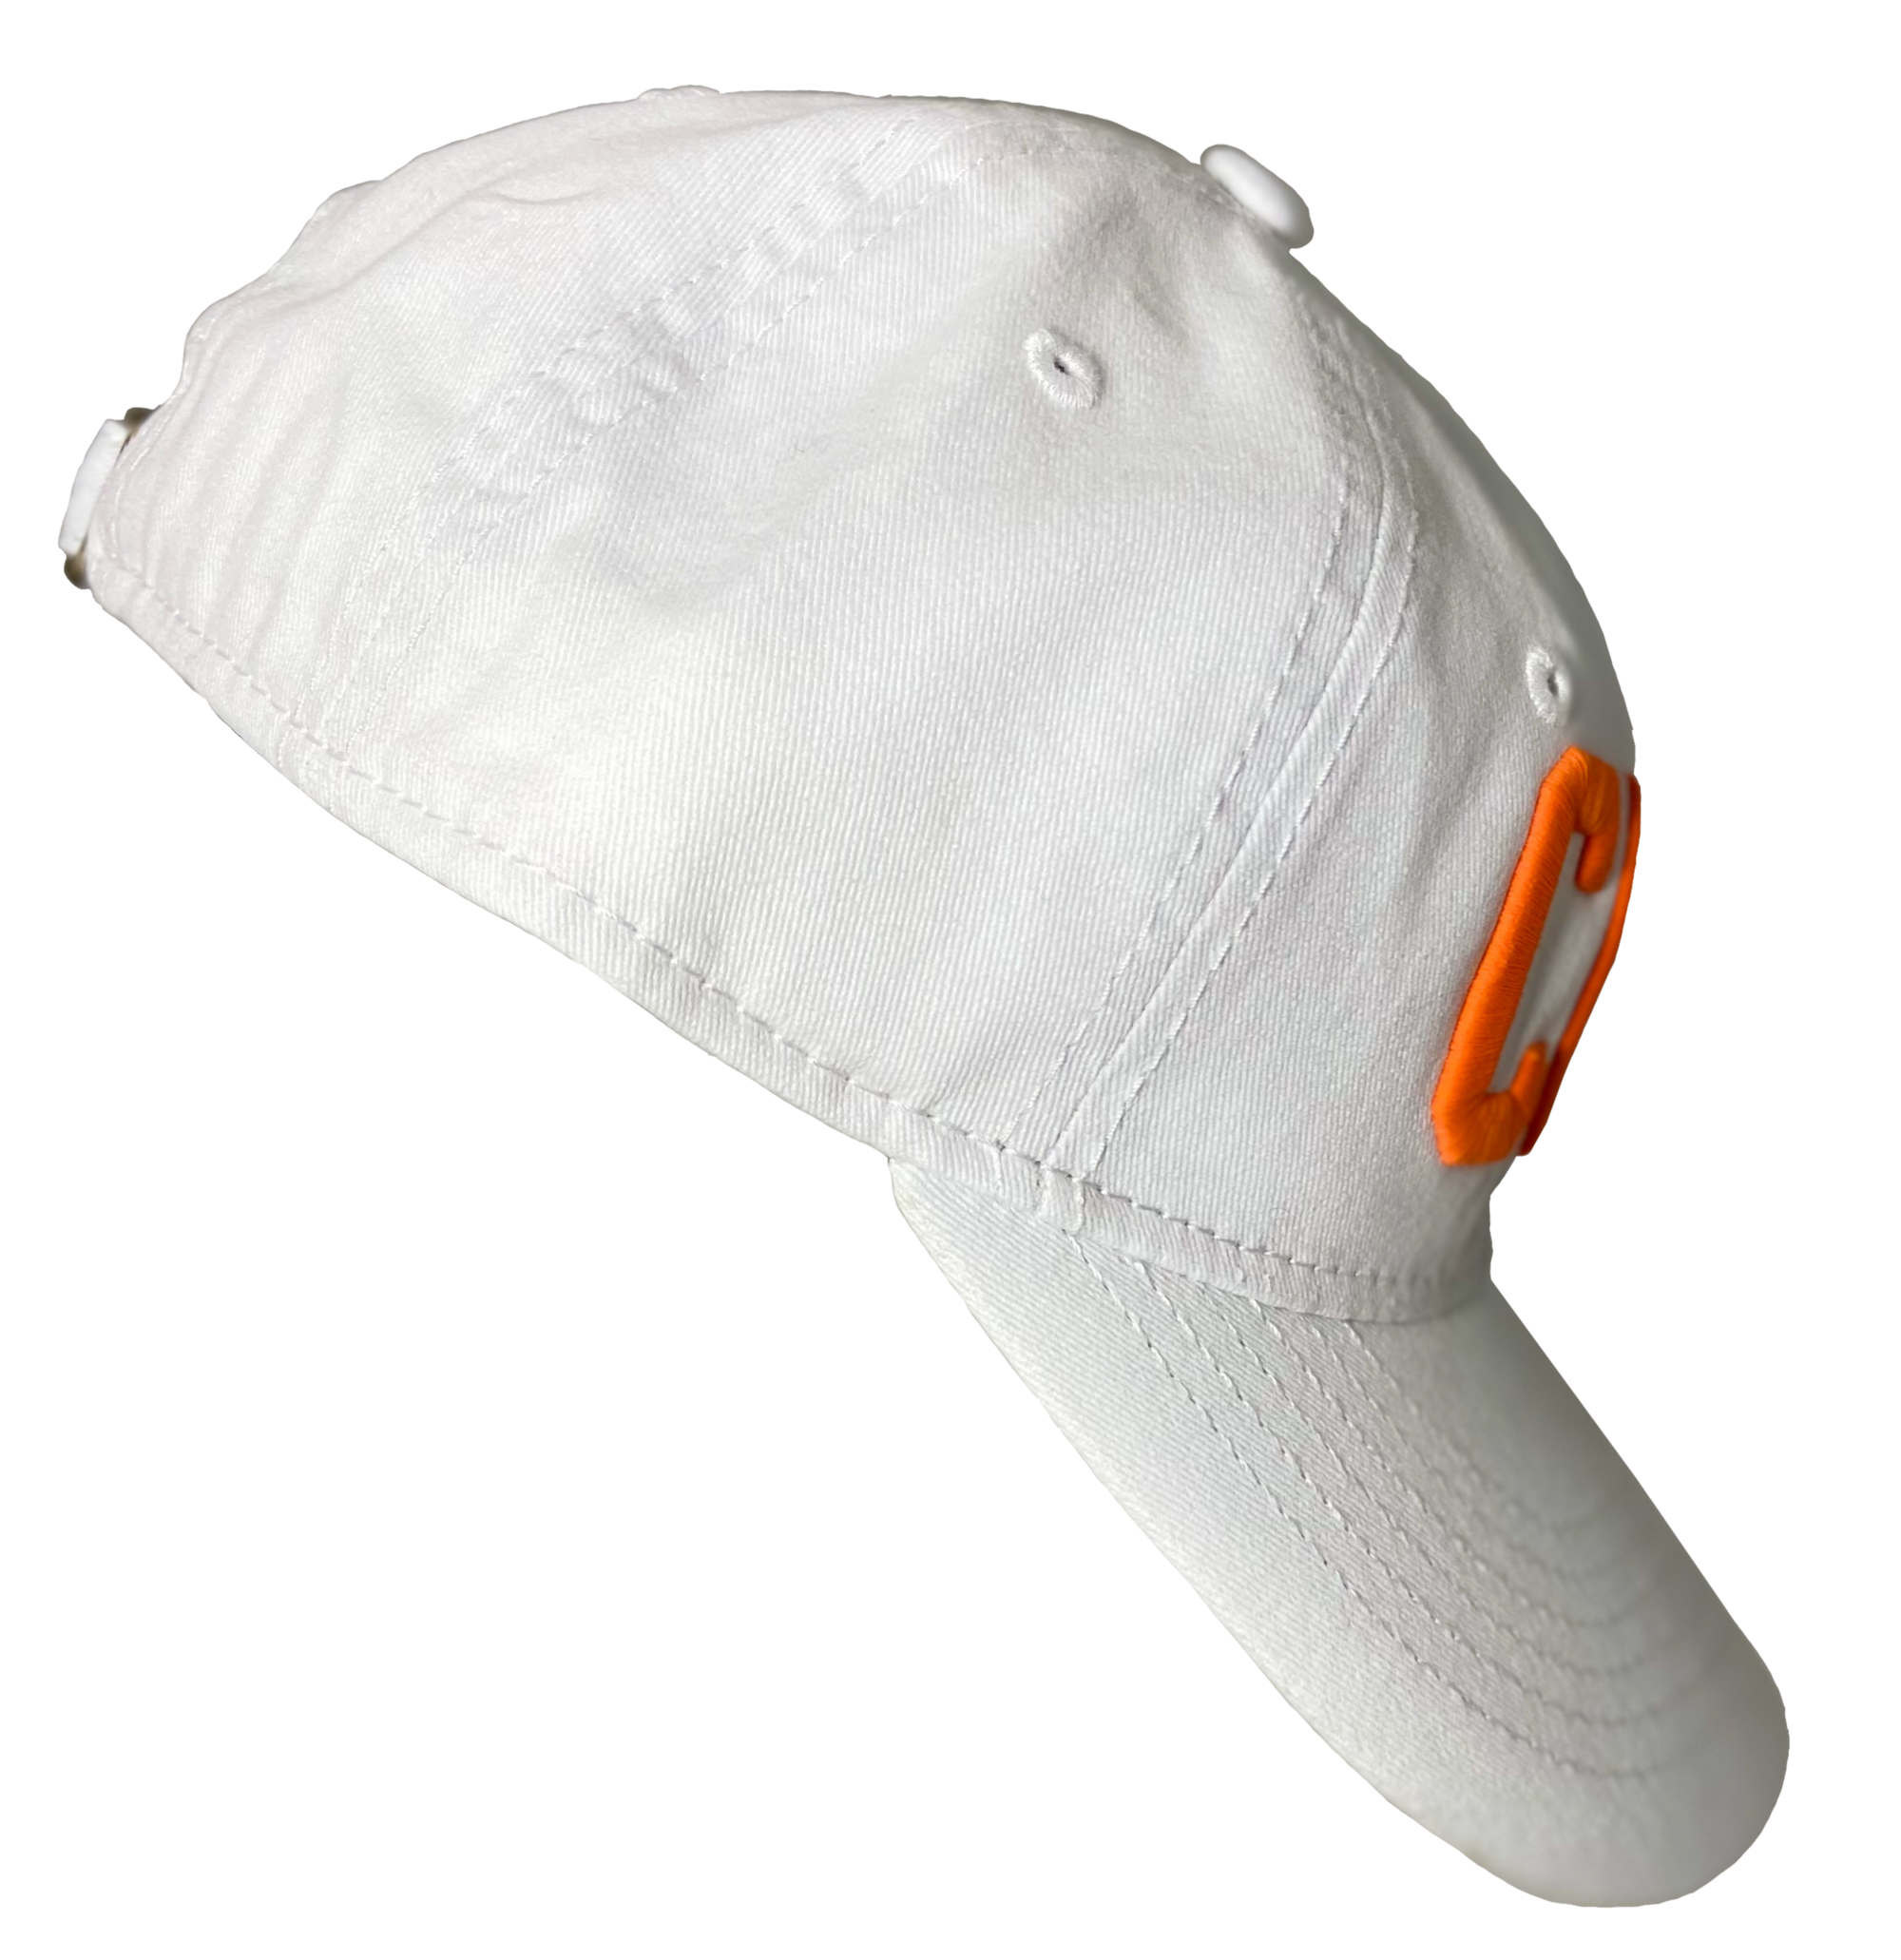 The CLE Baseball Cap - White/Orange